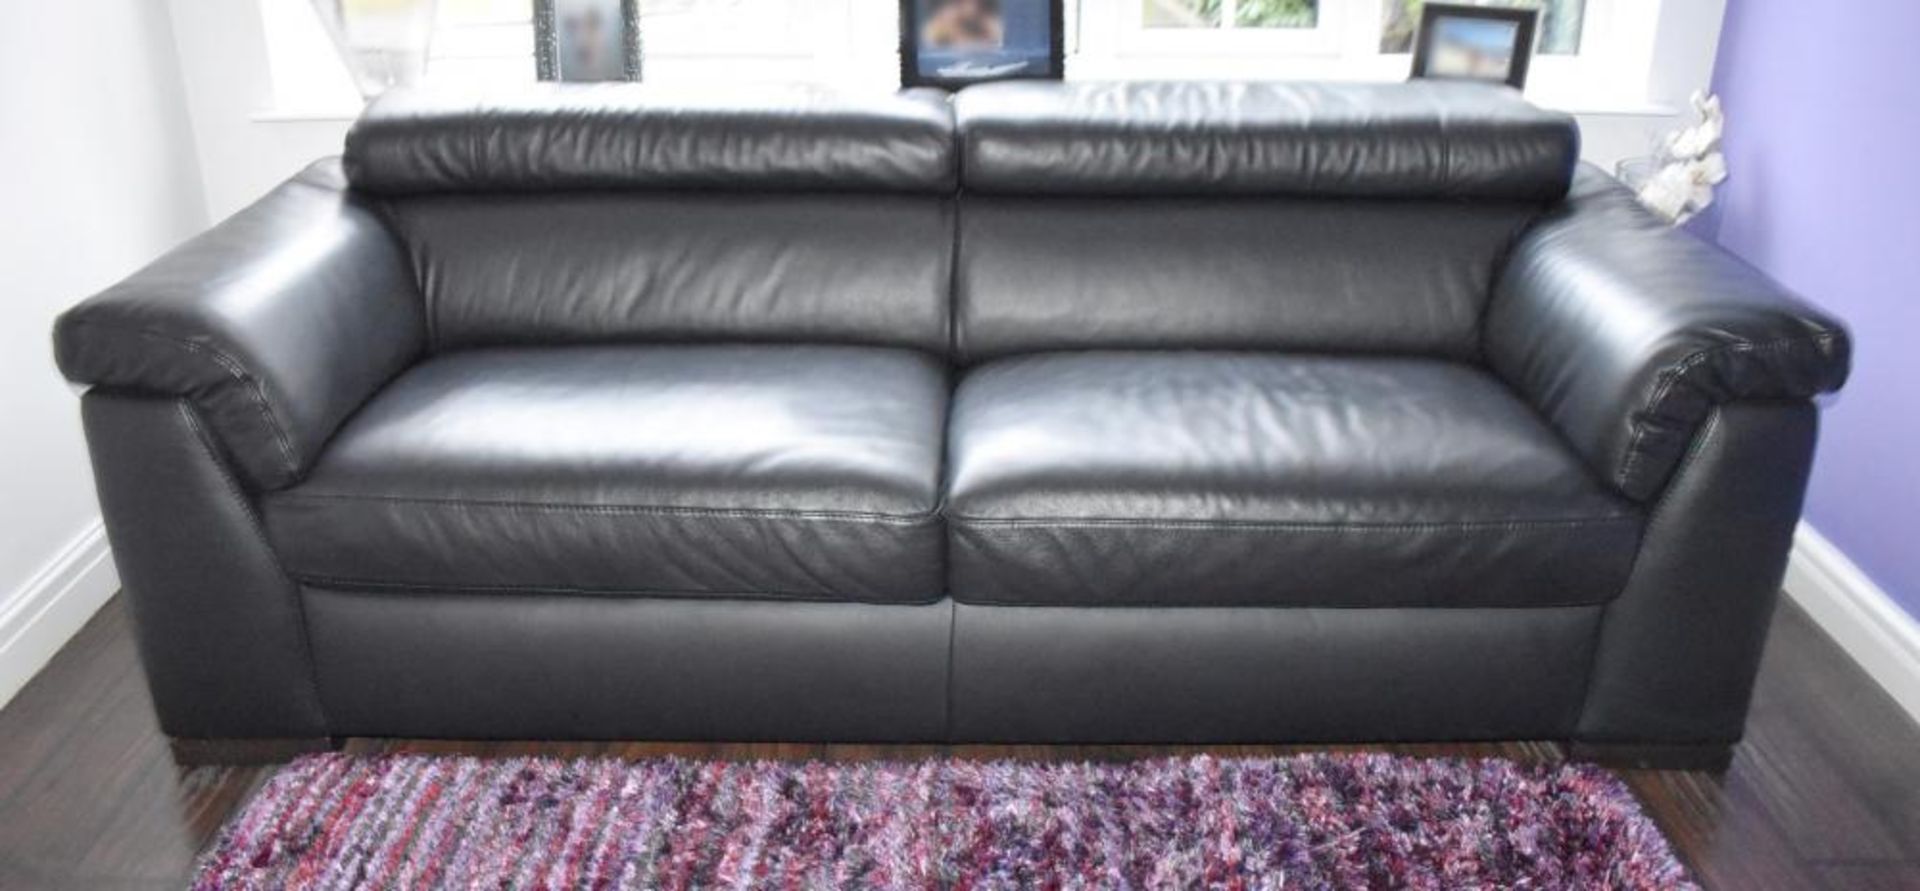 1 x Italsofa by Natuzzi Black Leather Sofa with 2 Purple DreamWeavers Cushions - CL469 - No VAT - Image 3 of 9